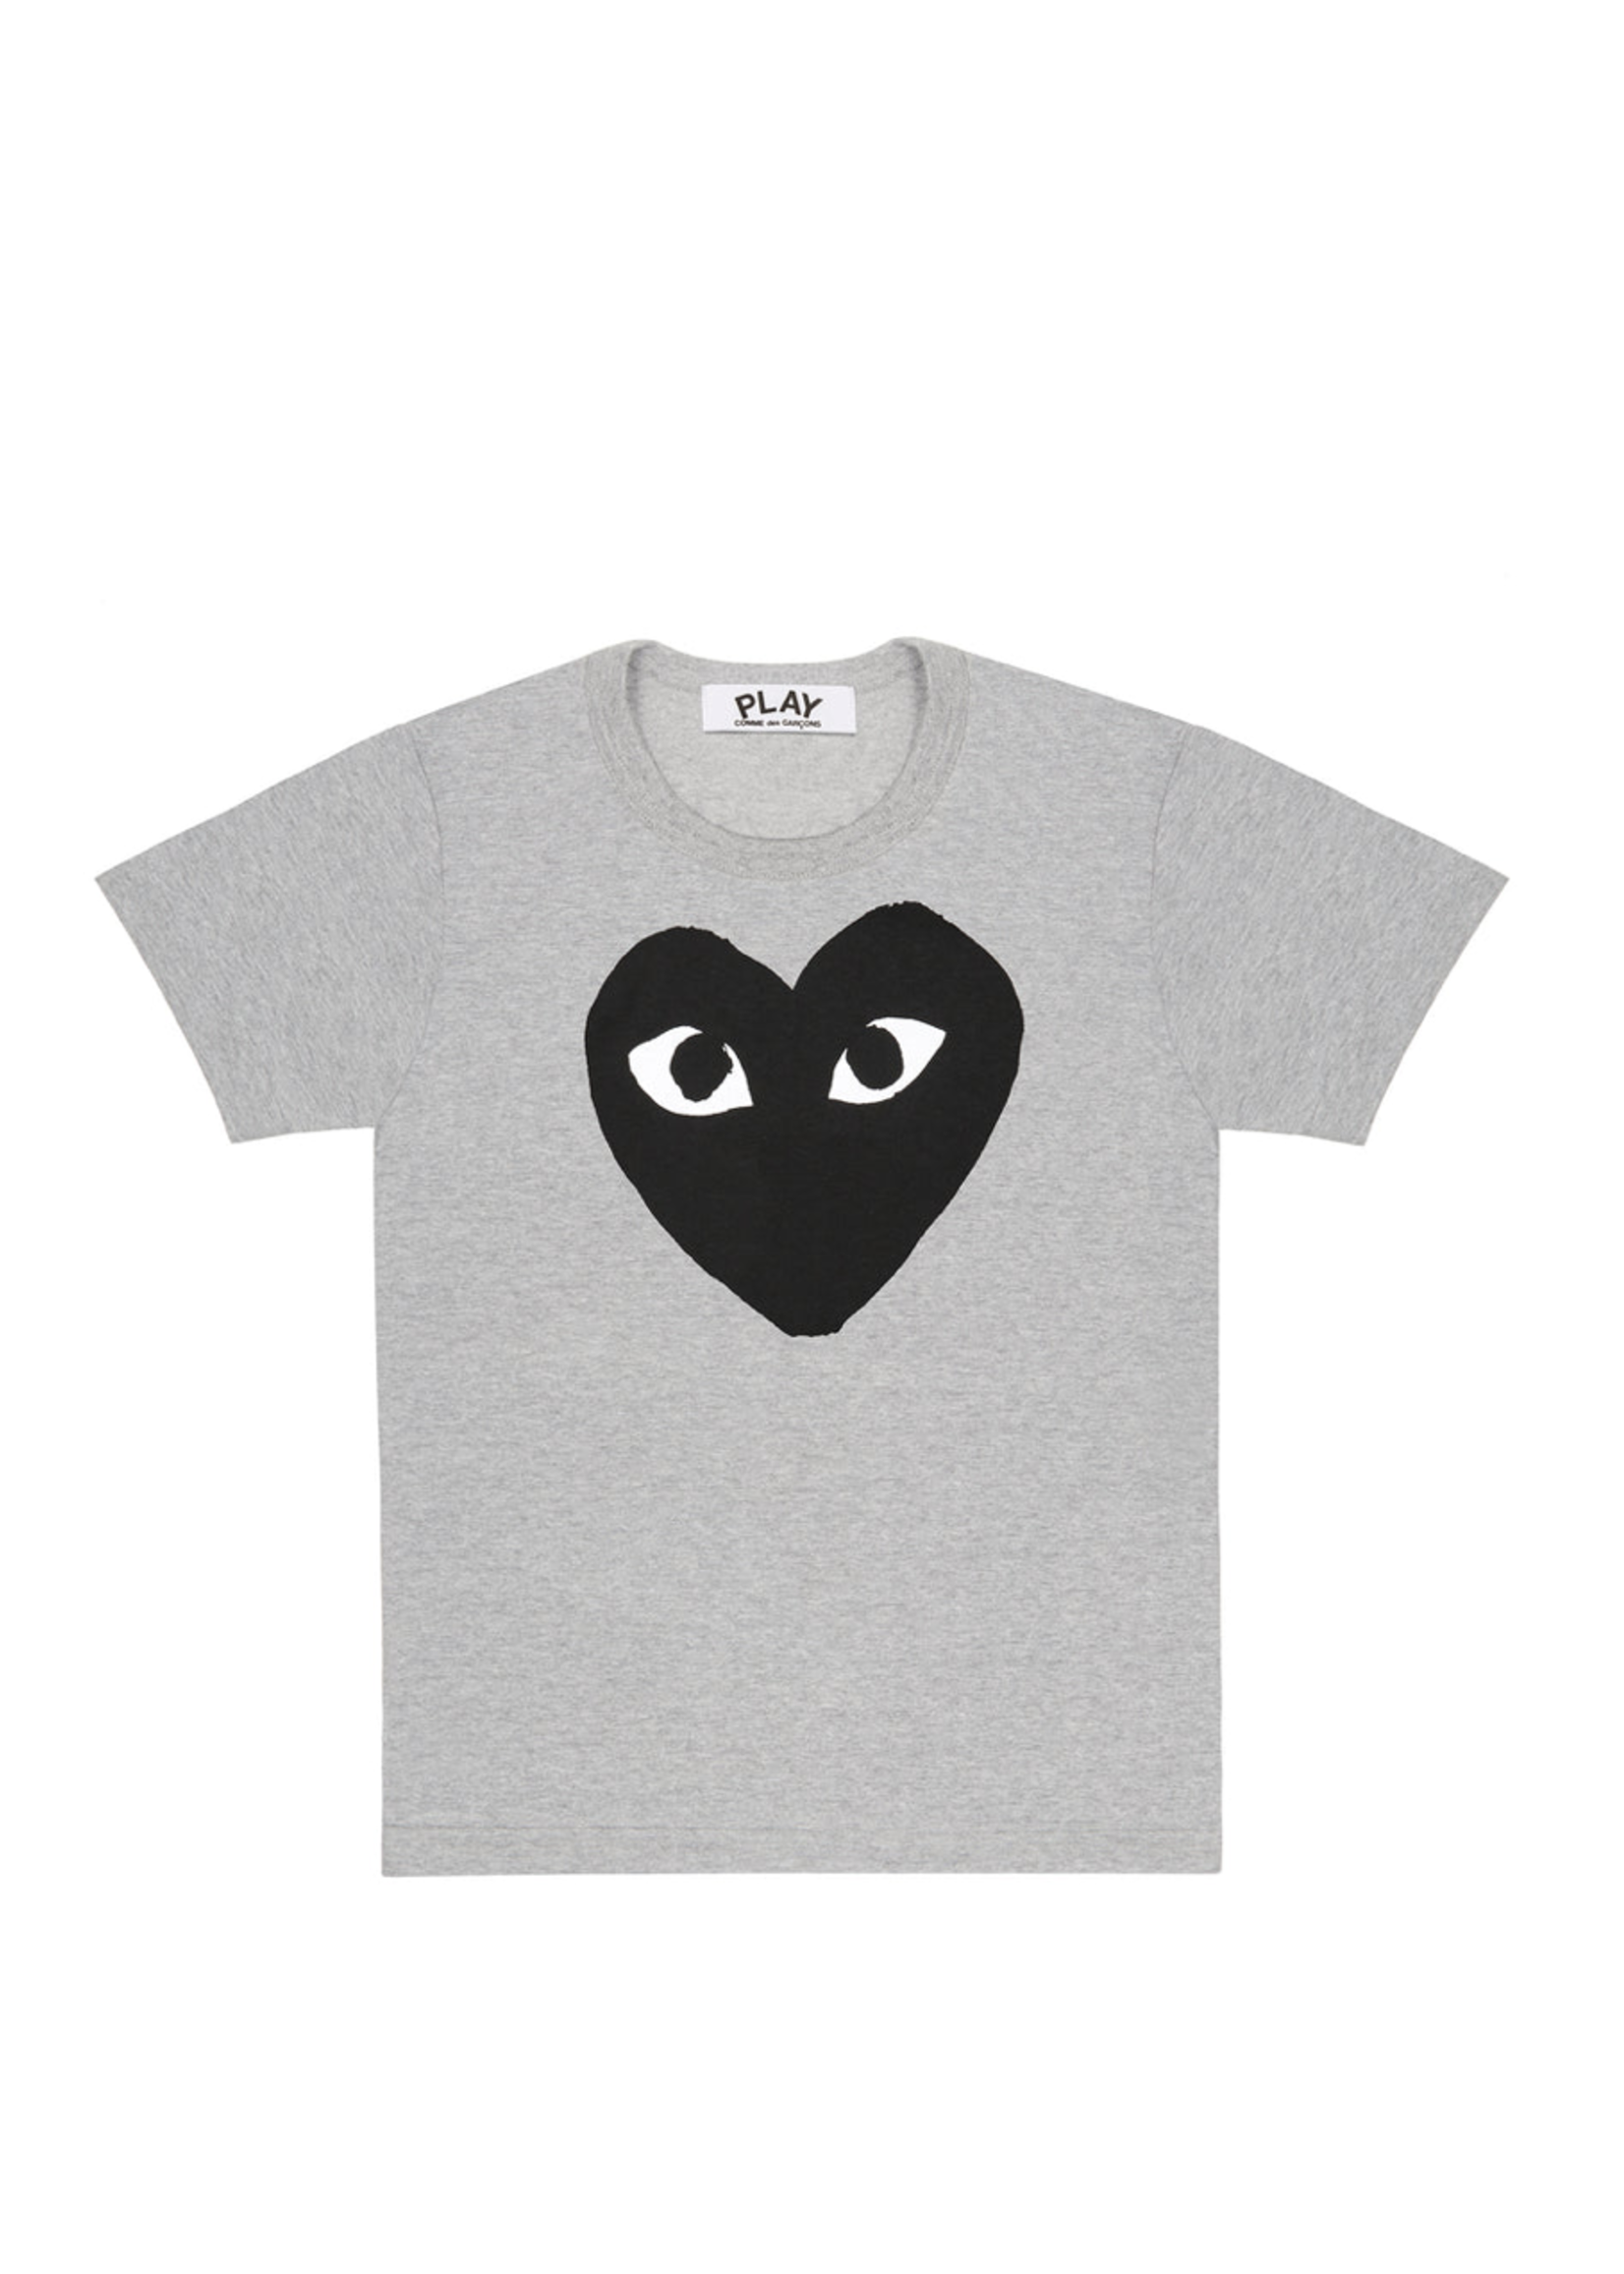 COMME des GARÇONS PLAY Black Heart on Heather Grey T-shirt